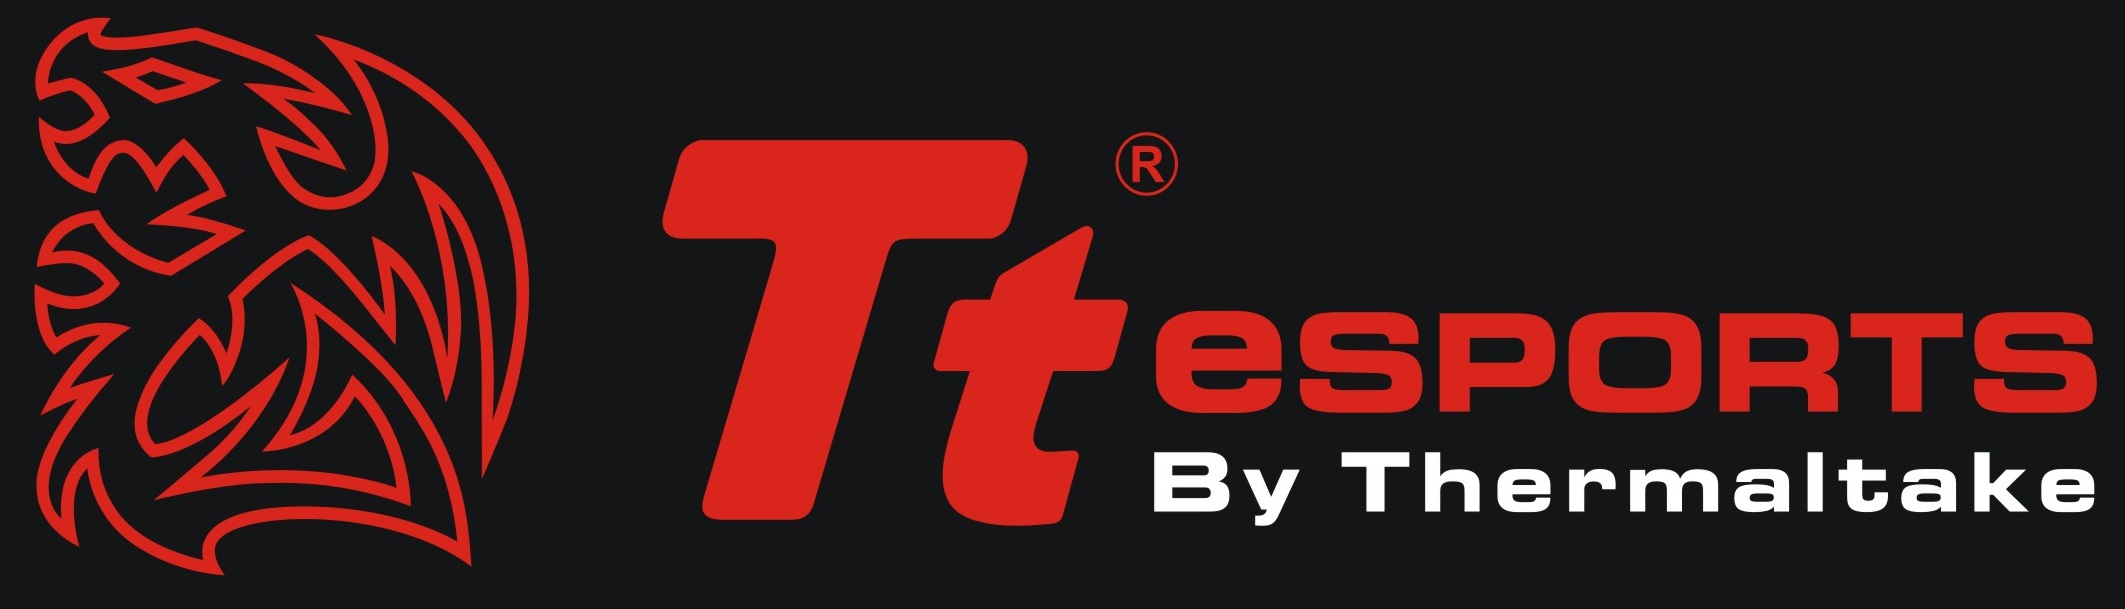 Tt eSPORTS logo